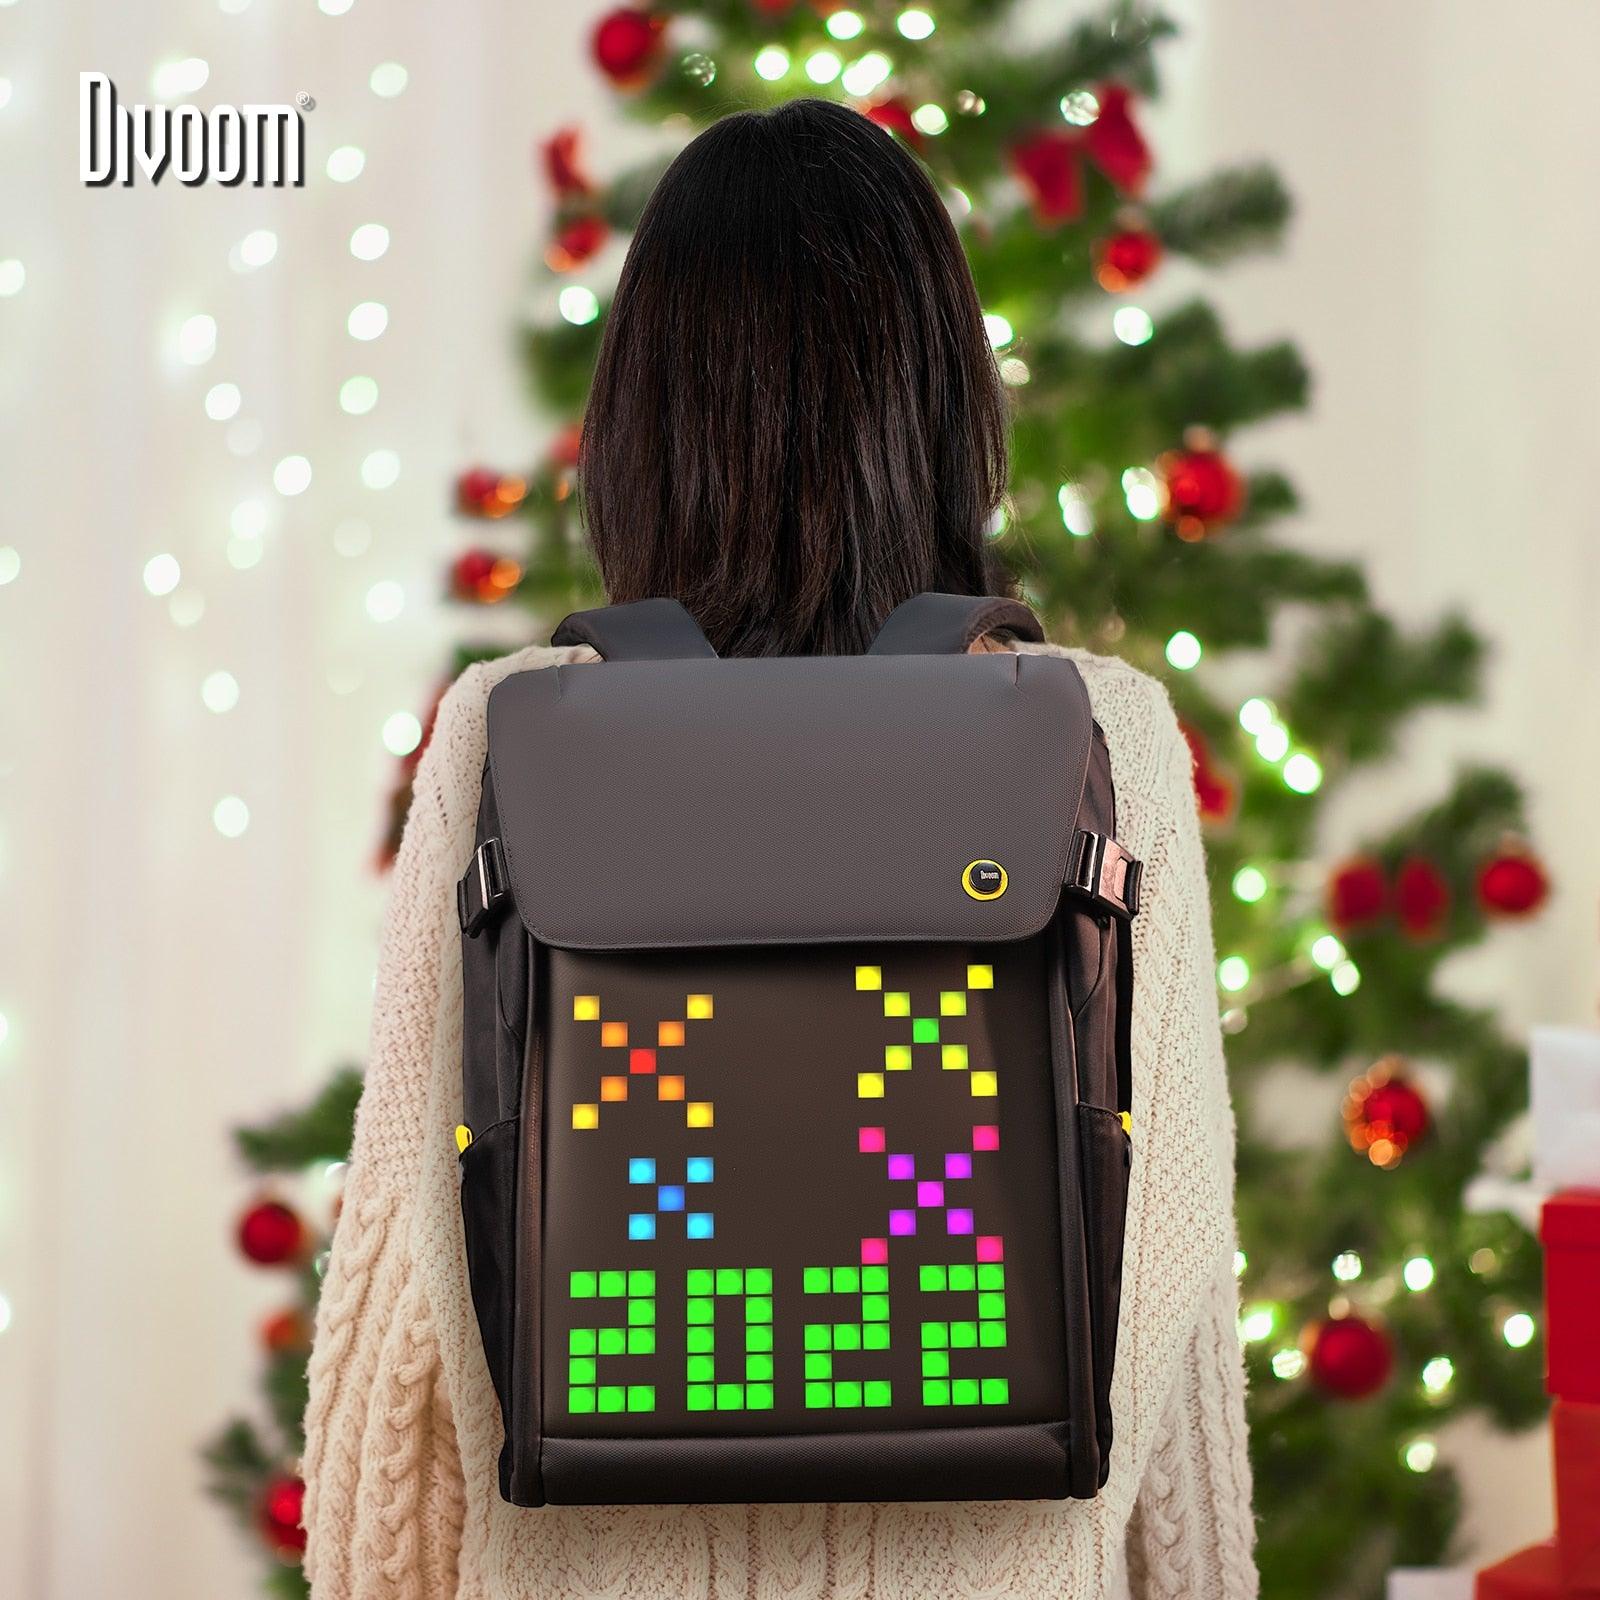 Divoom Pixoo M Waterproof Laptop Backpack - LED Screen and Pixel Art Decor